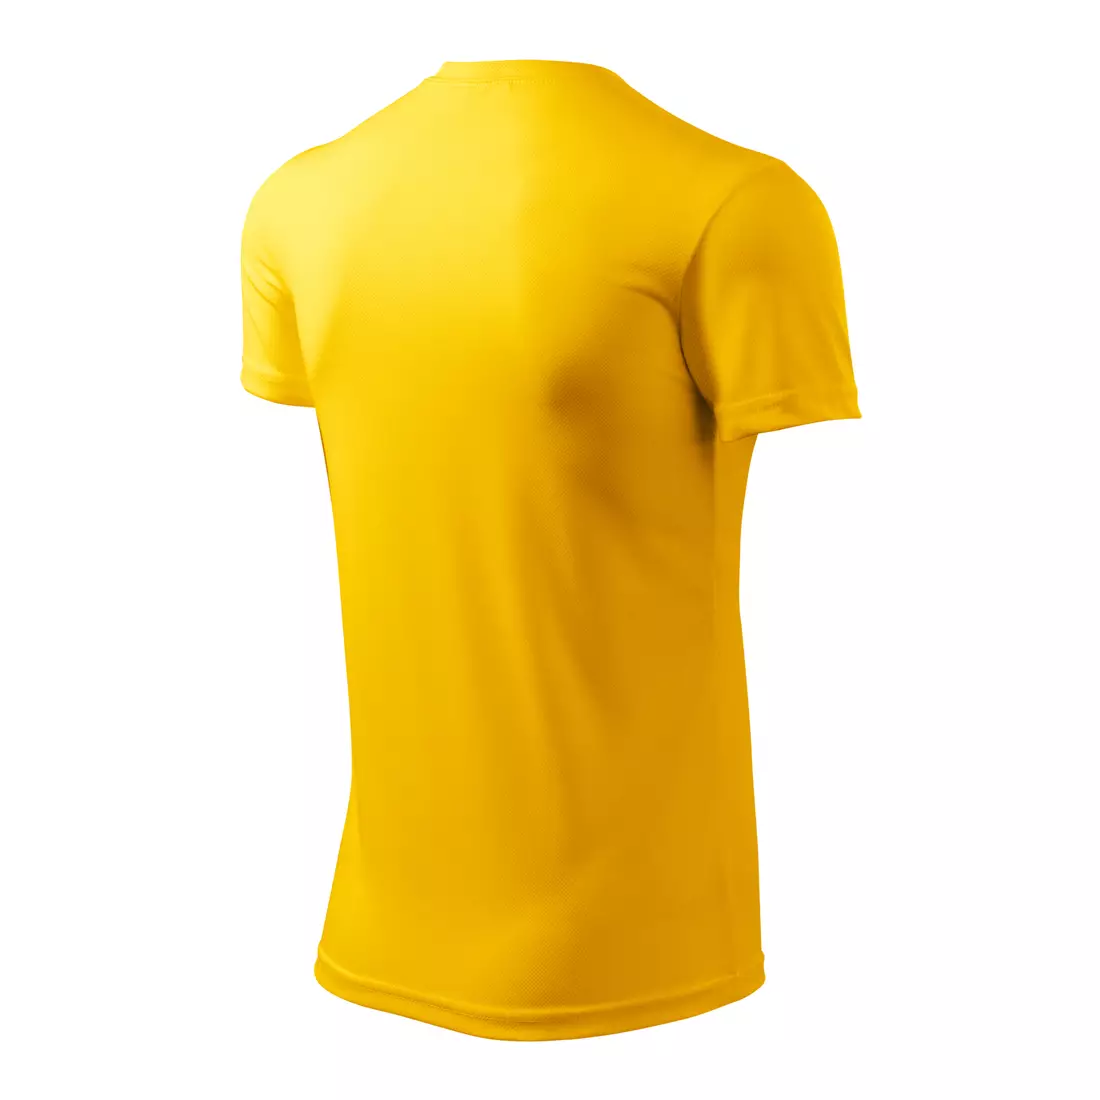 MALFINI FANTASY - Men's Sports T-Shirt 100% Polyester, Yellow 1240413-124